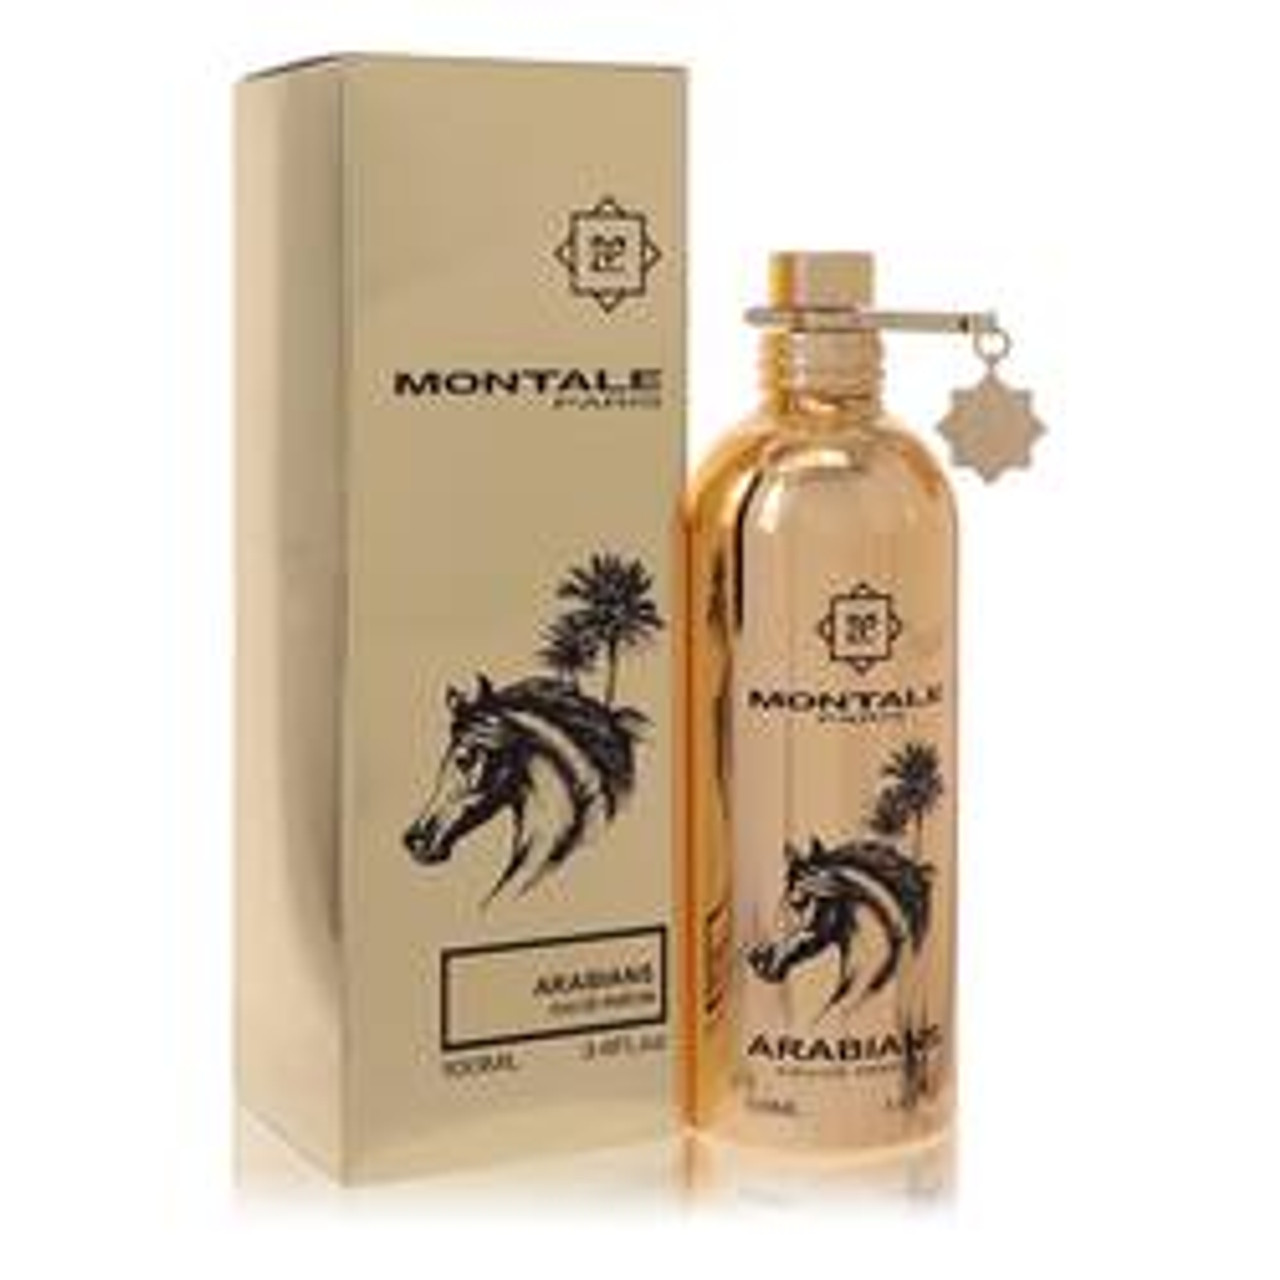 Montale Arabians Perfume By Montale Eau De Parfum Spray (Unisex) 3.4 oz for Women - *Pre-Order